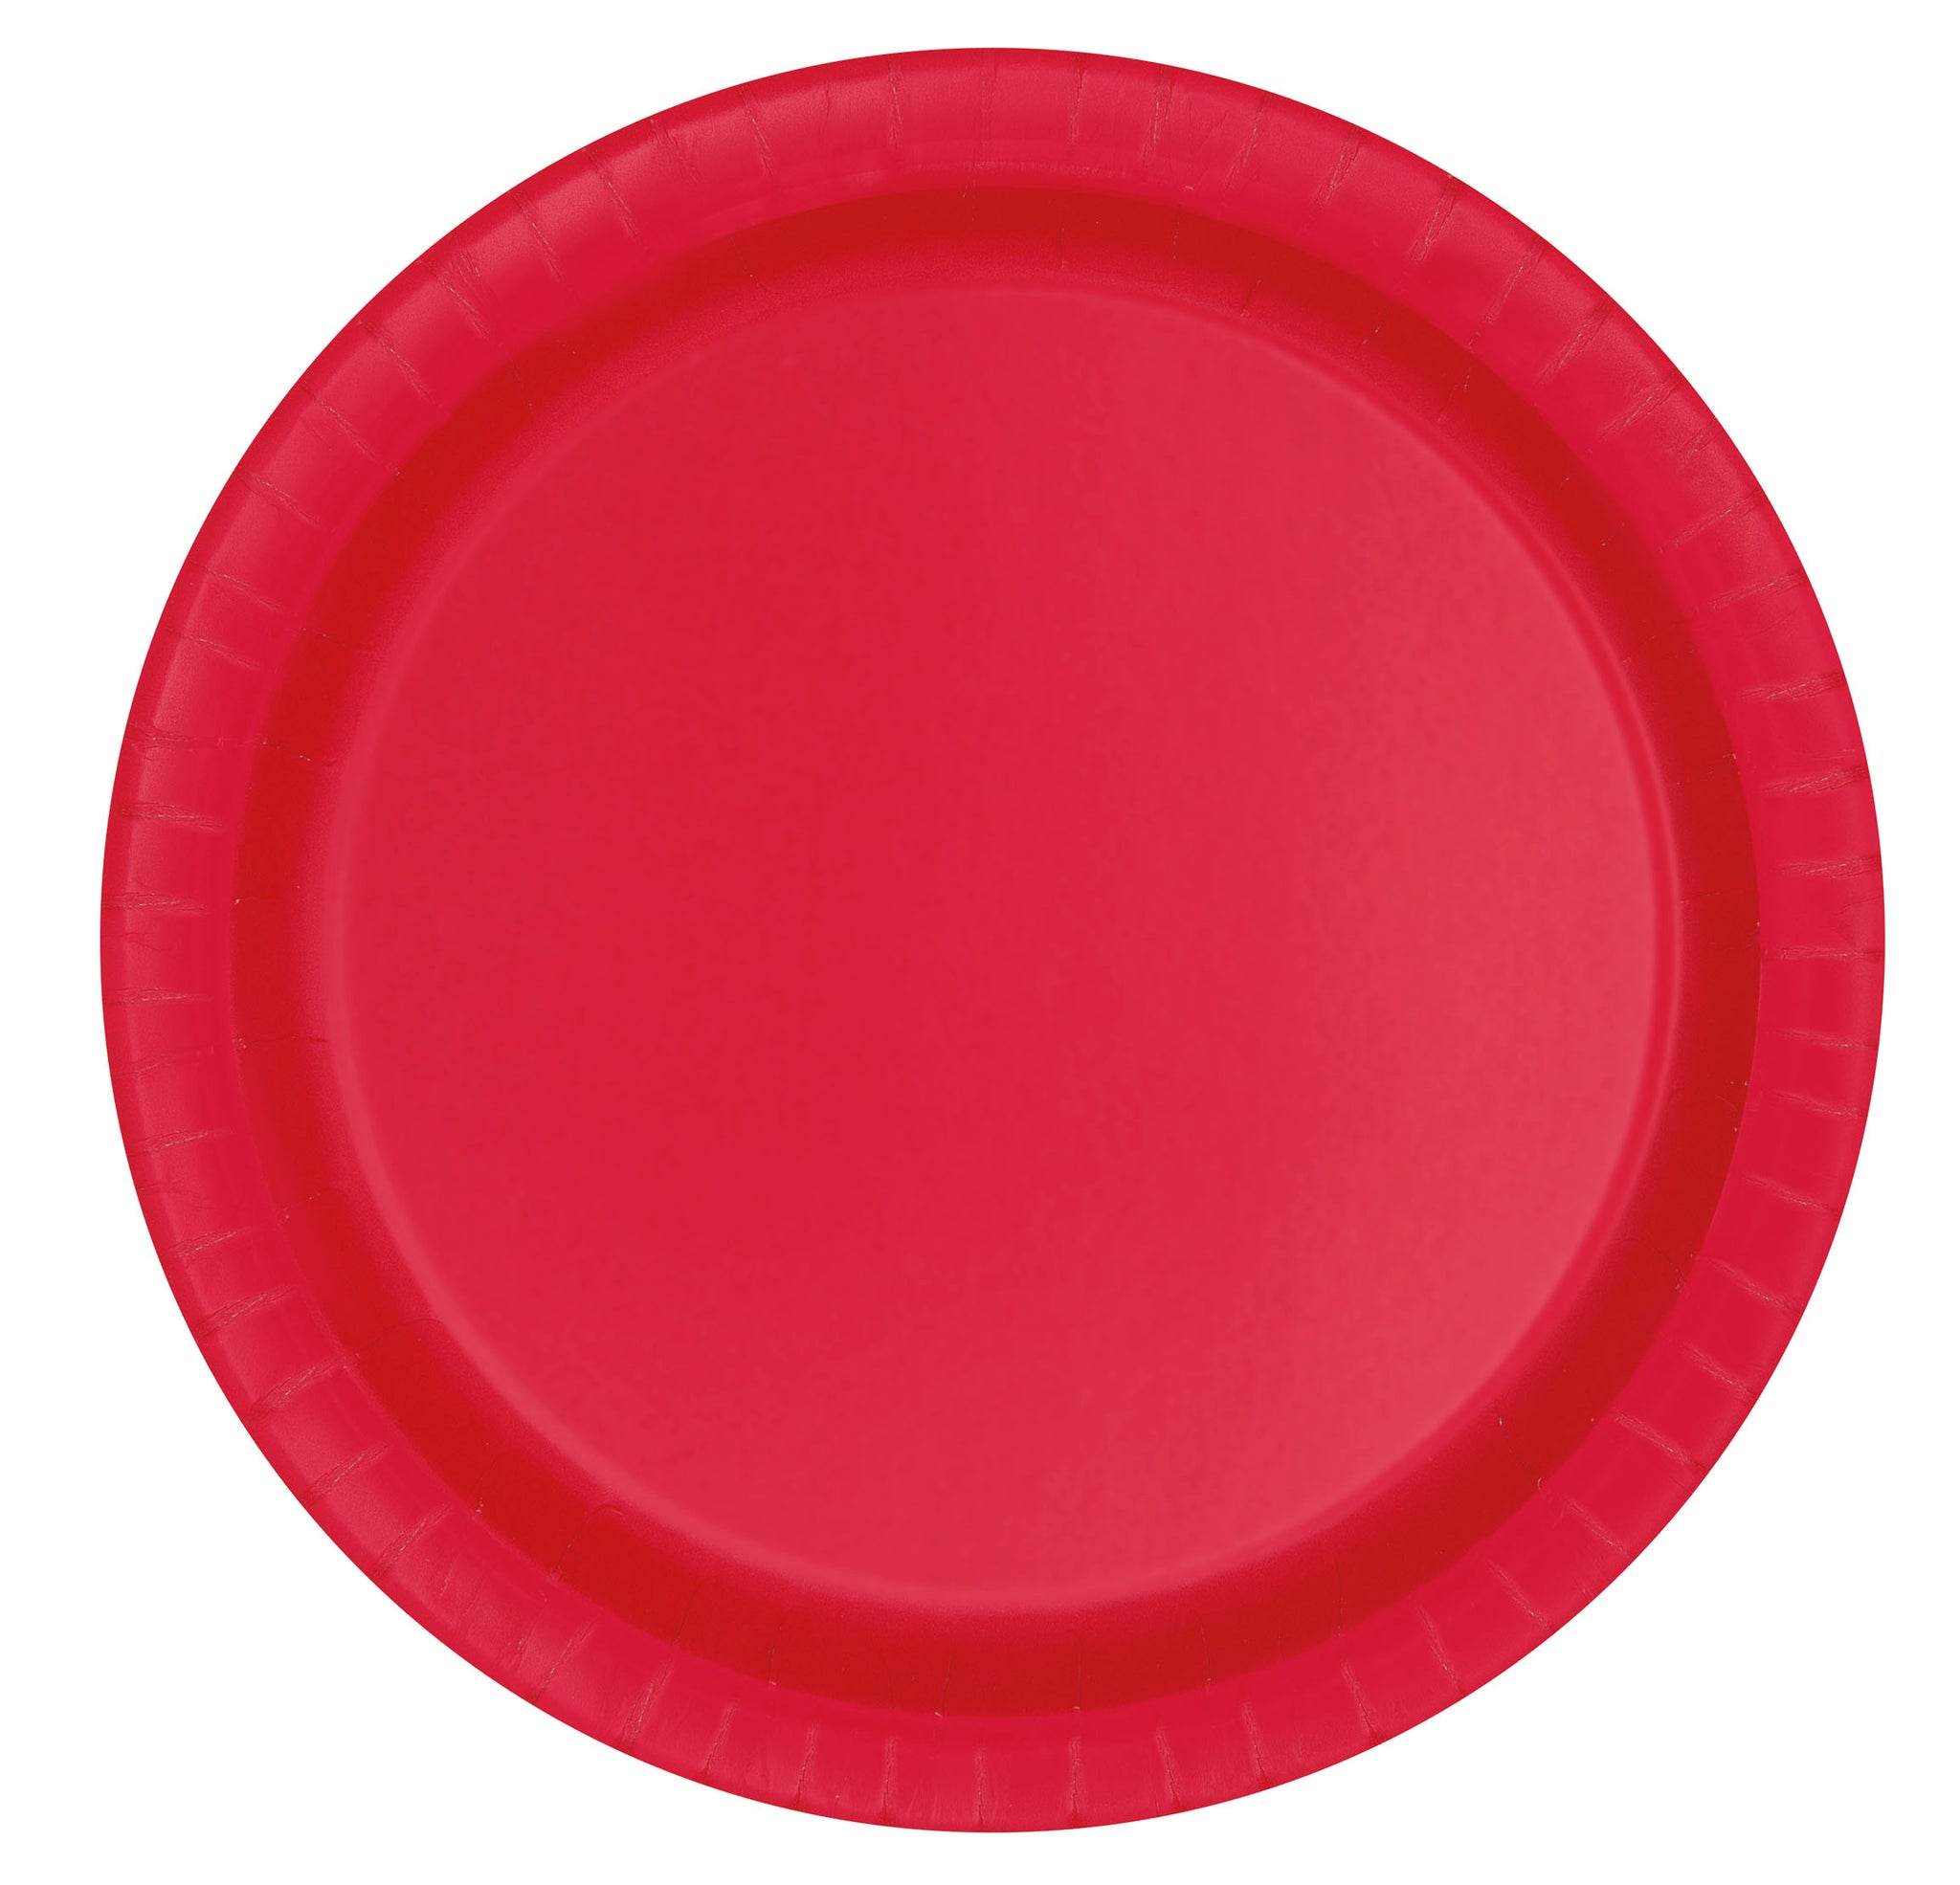 Ruby Red Solid Round 7" Dessert Plates, 8ct